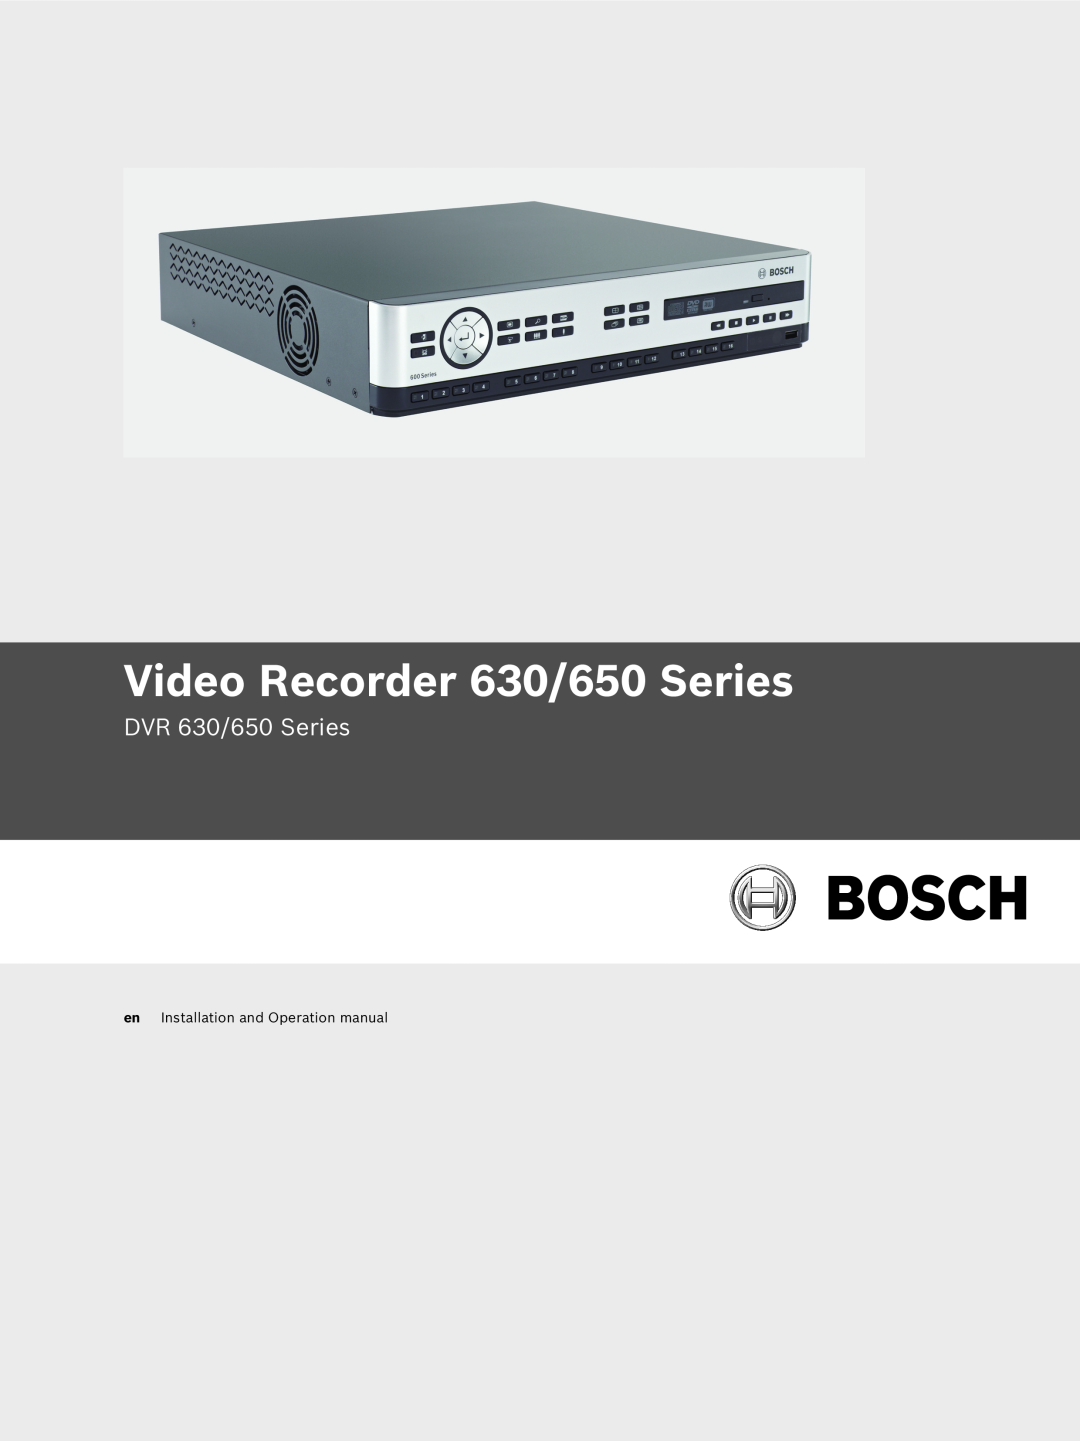 Bosch Appliances operation manual Video Recorder 630/650 Series, DVR 630/650 Series 